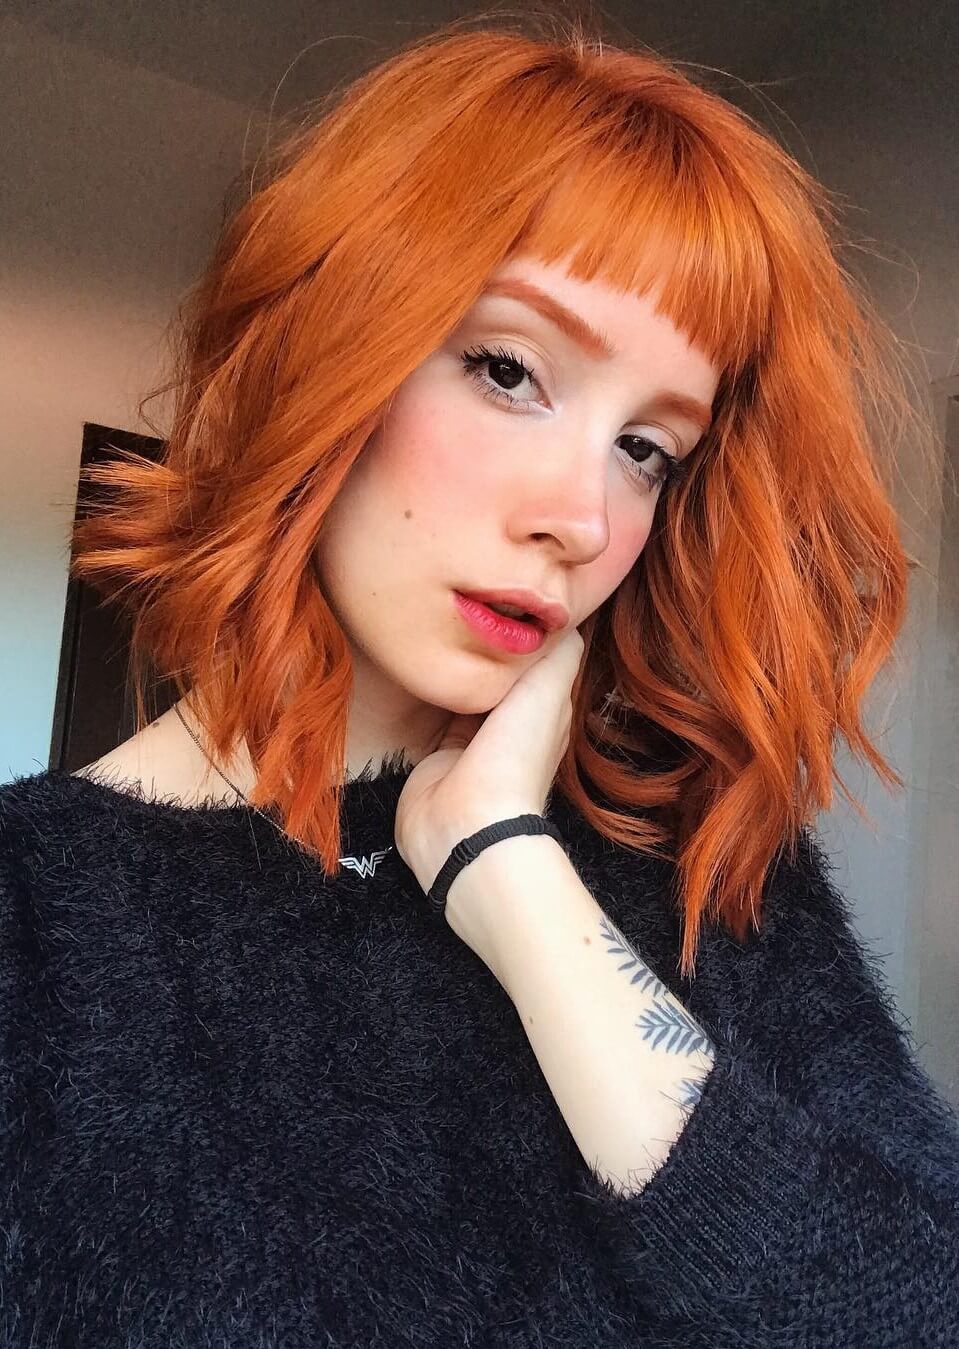 Orange hair with bangs haircut by mmiruiz